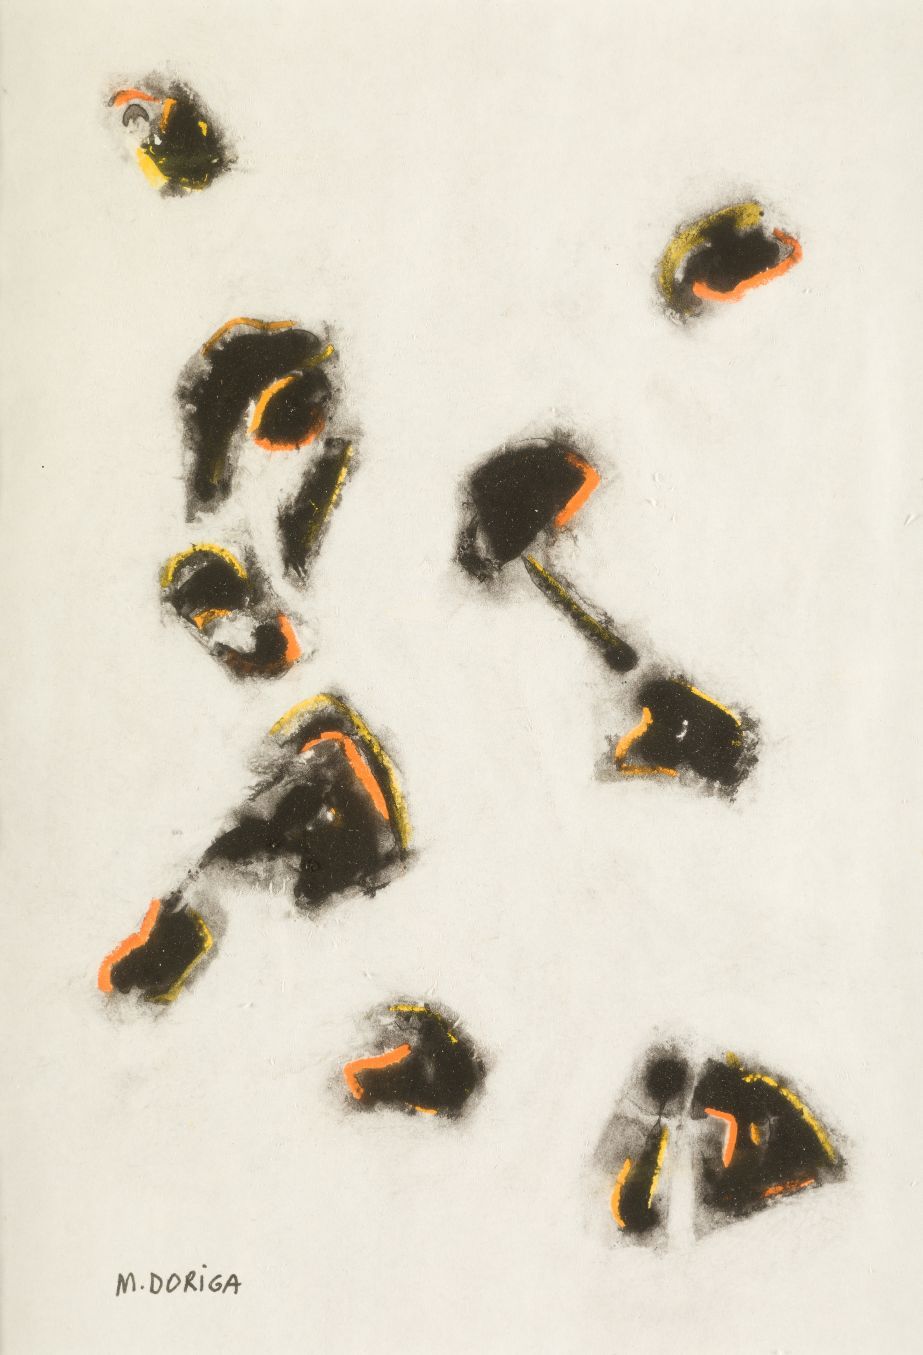 MAURICO DORIGA (C.20th / .) "Untitled" 左下角有签名 纸上混合媒体。29 x 20 cm